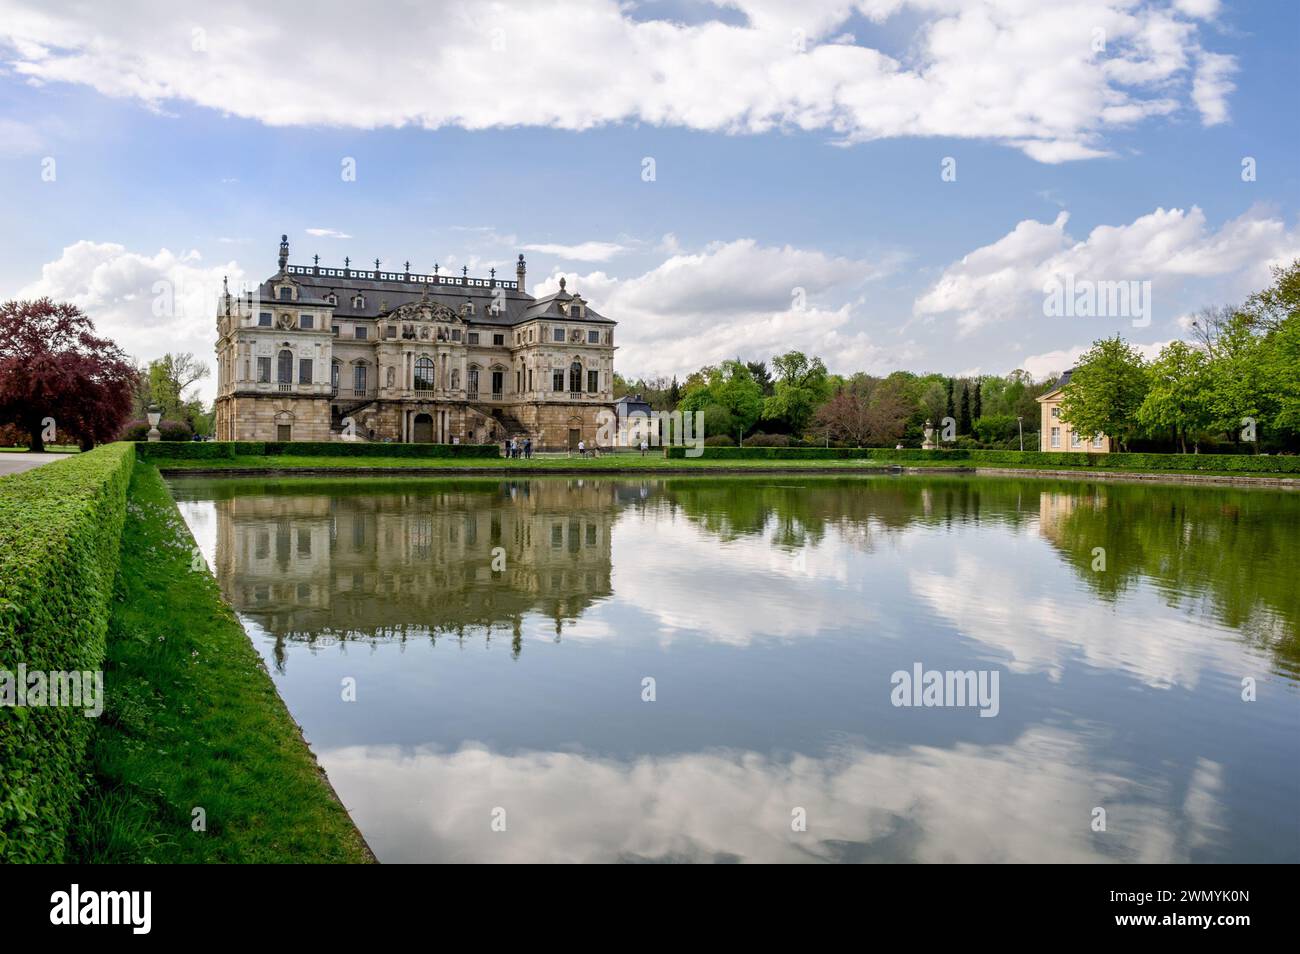 € palazzo barocco riflesso nelle acque di Palaisteich a Grosser Garten a Dresda, Germania Foto Stock